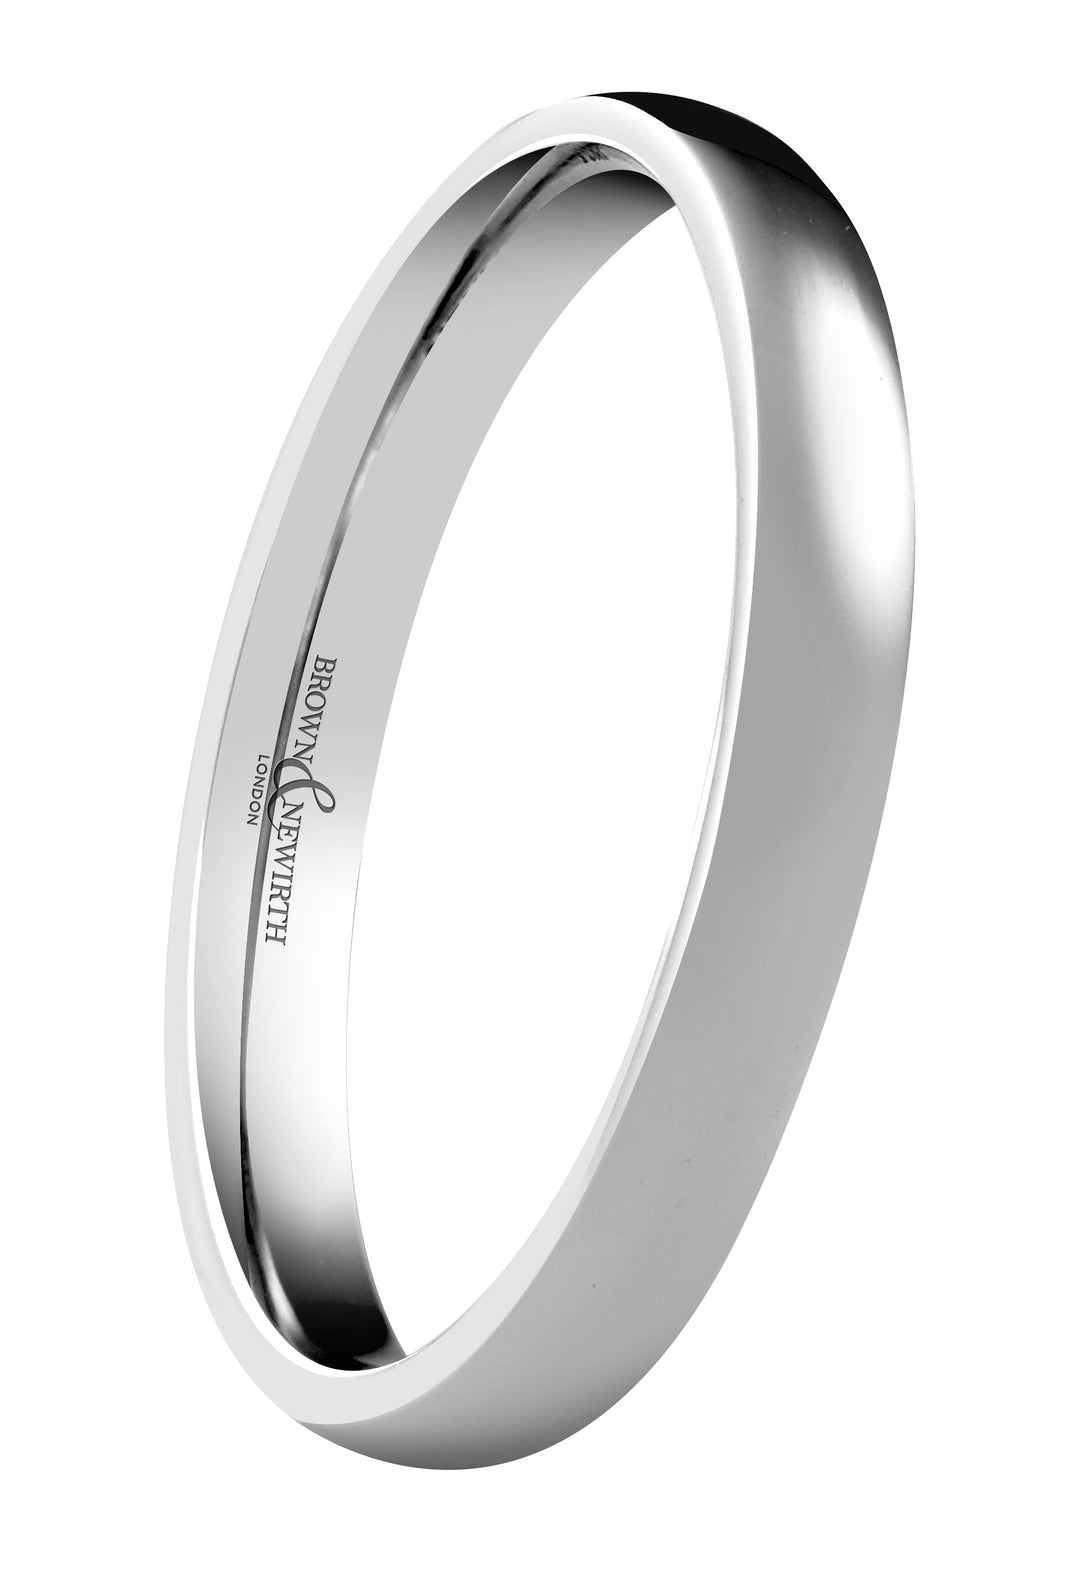 B&N Simplicity Wedding Ring 4mm